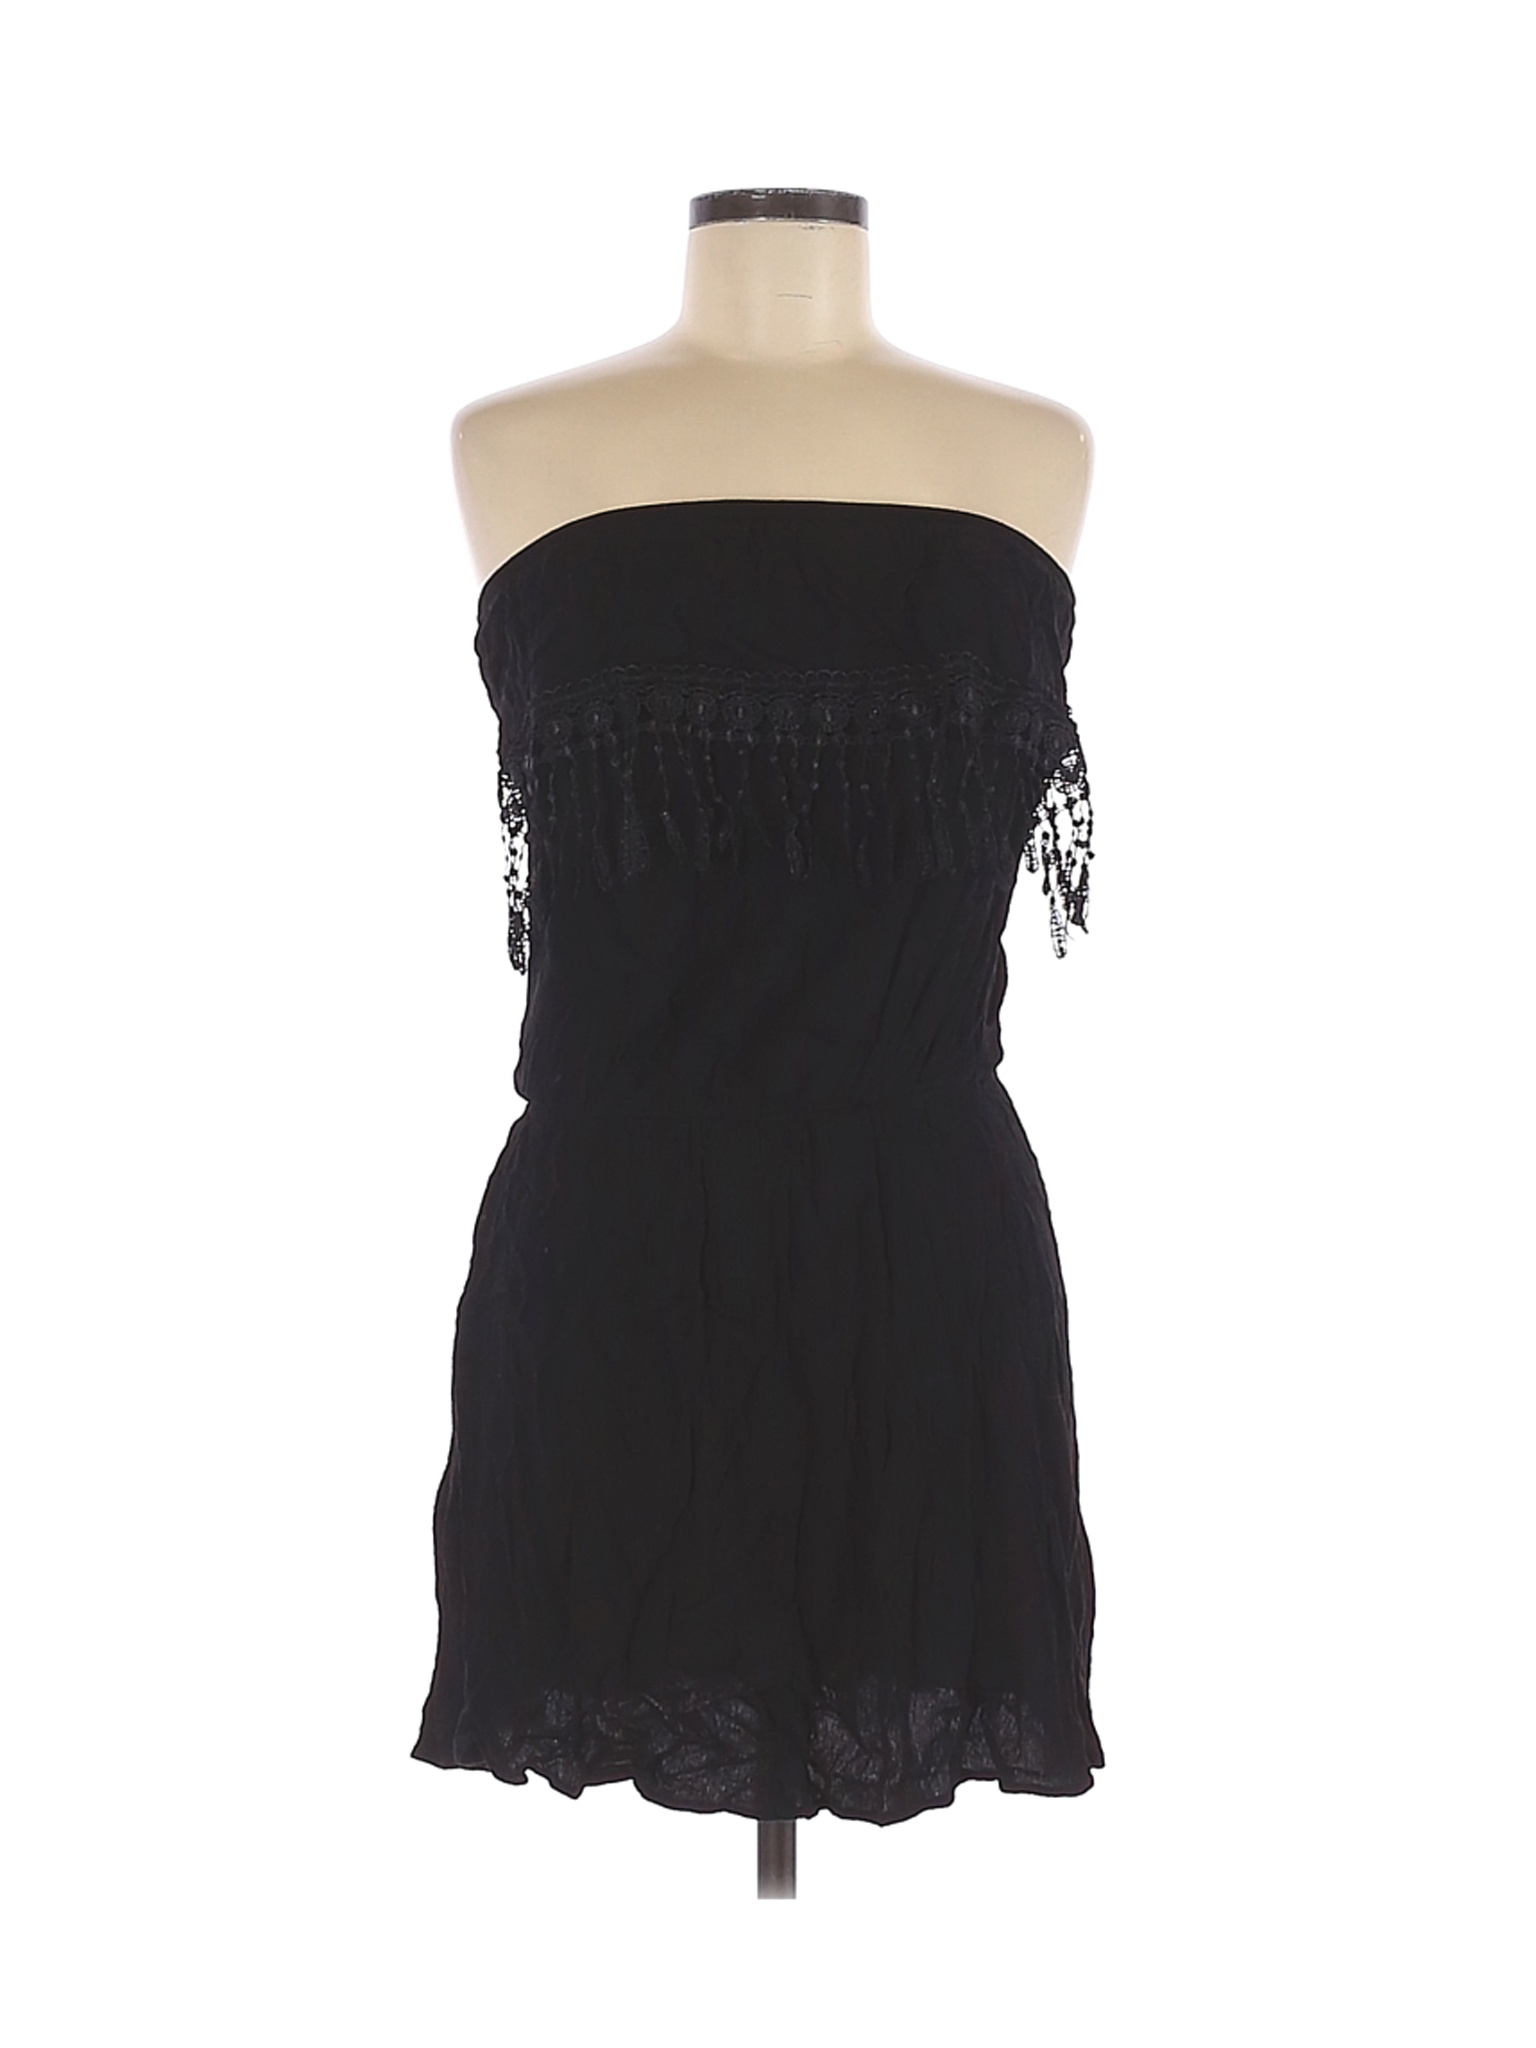 Ocean Drive Clothing Co. Women Black Casual Dress M | eBay